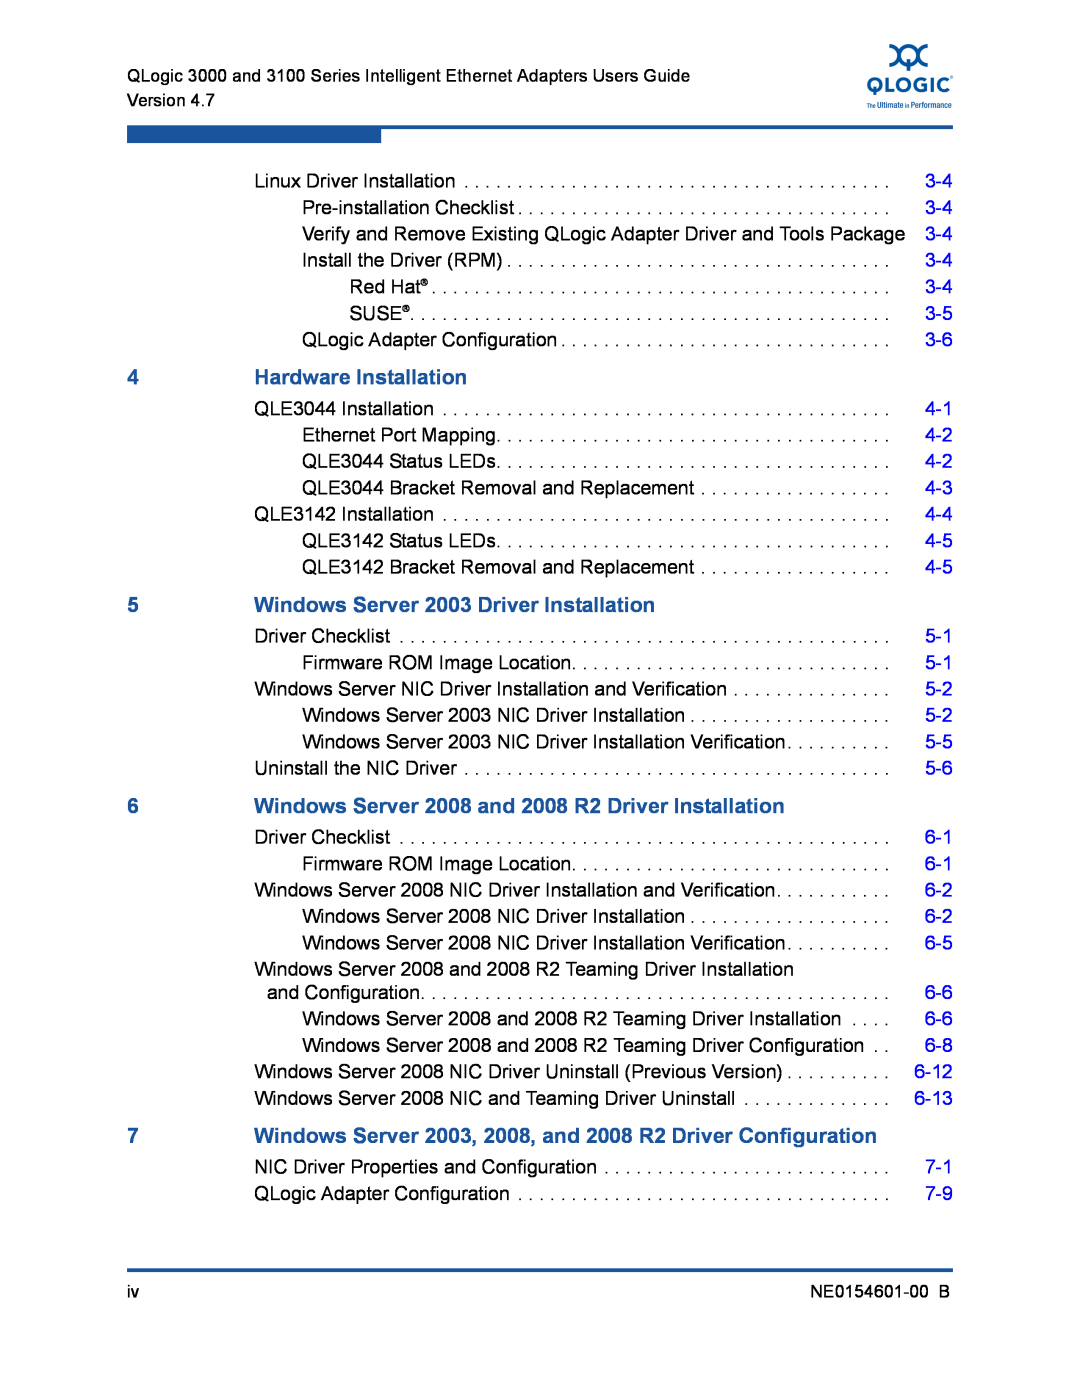 Q-Logic 3100, 3000 manual Hardware Installation, Windows Server 2003 Driver Installation, 6-12, 6-13 